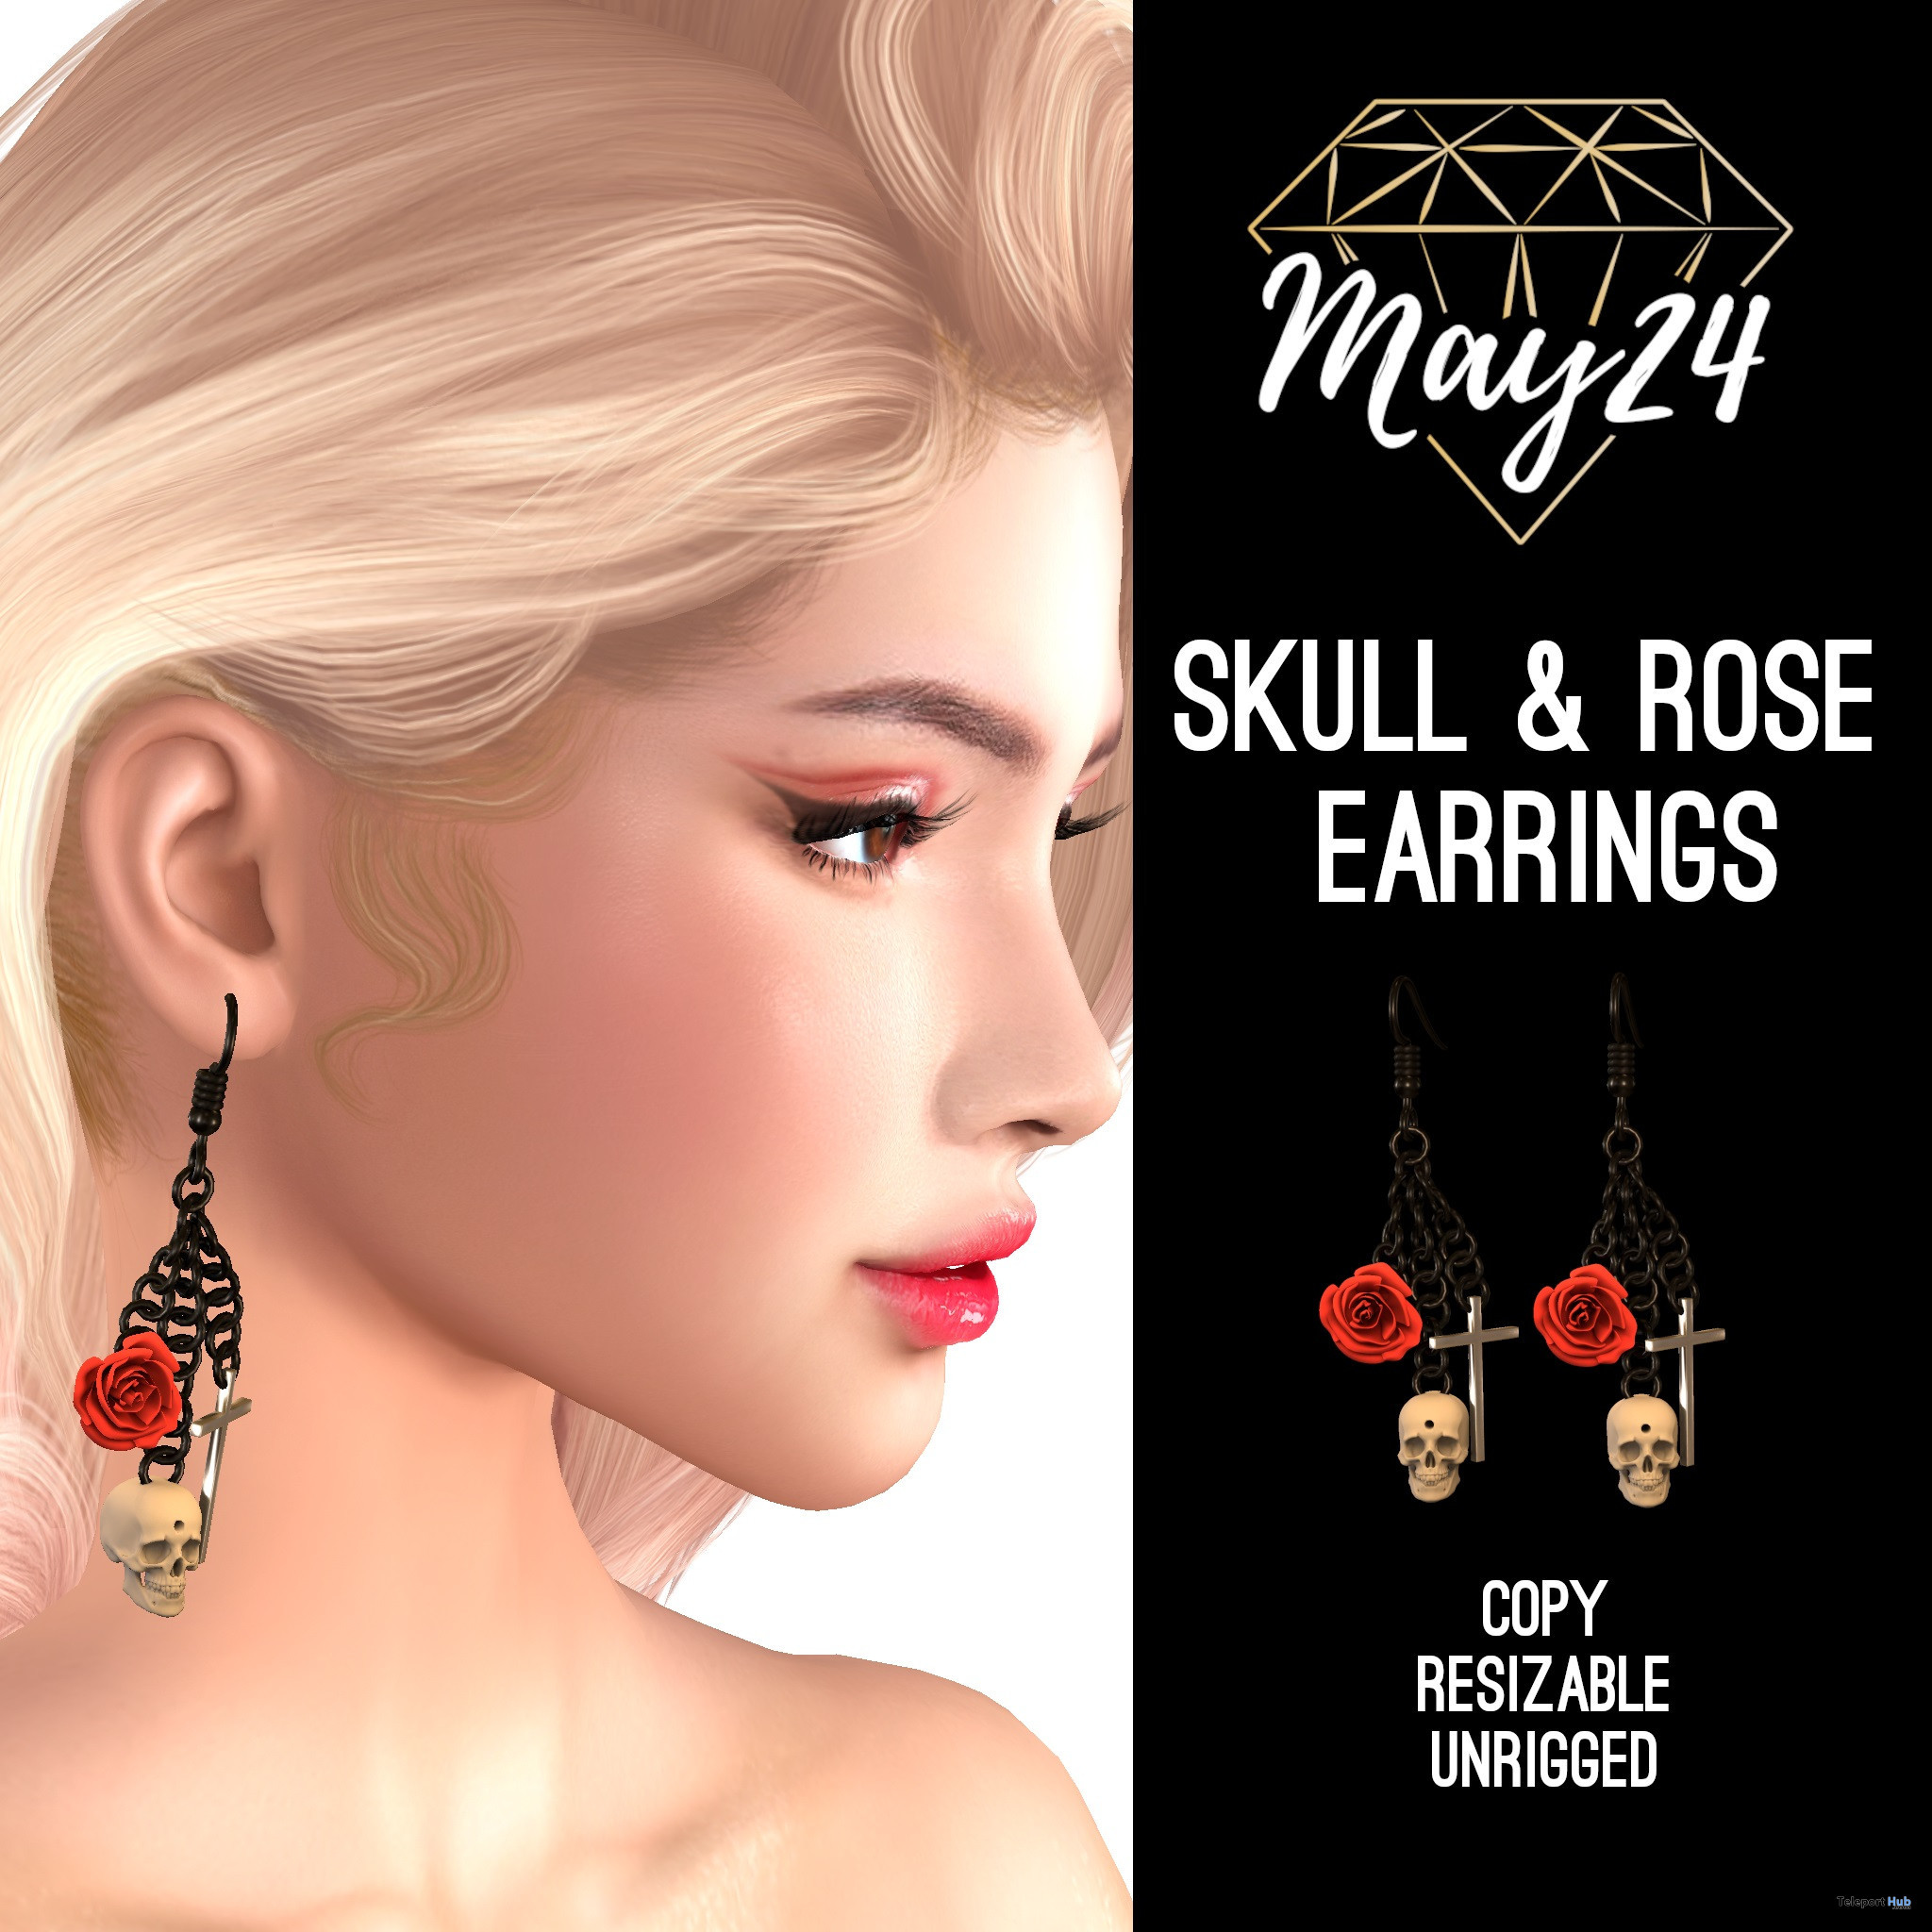 Skull & Rose Earrings Halloween 2022 Group Gift by May24 - Teleport Hub - teleporthub.com